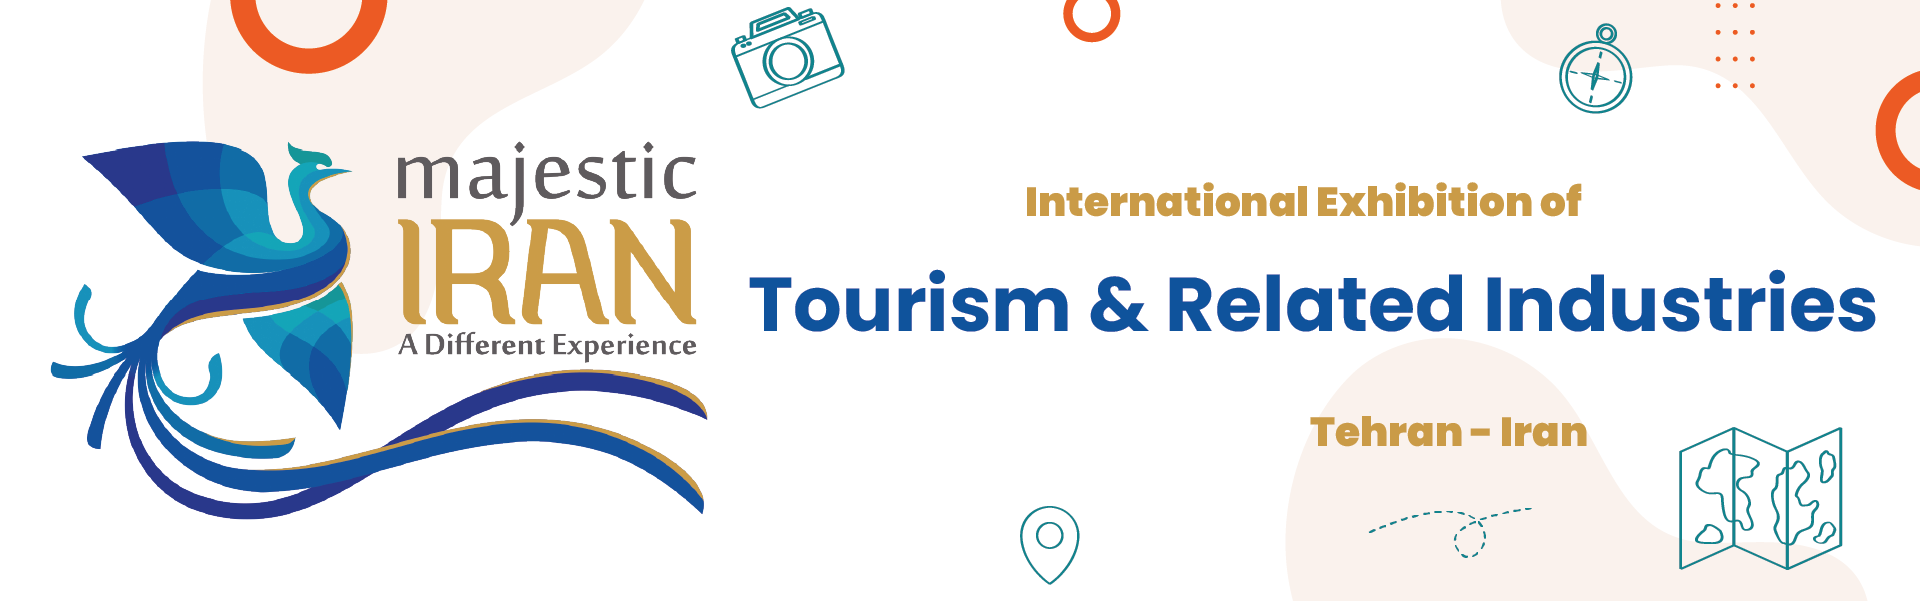 Iran Tourism Industry Exhibition